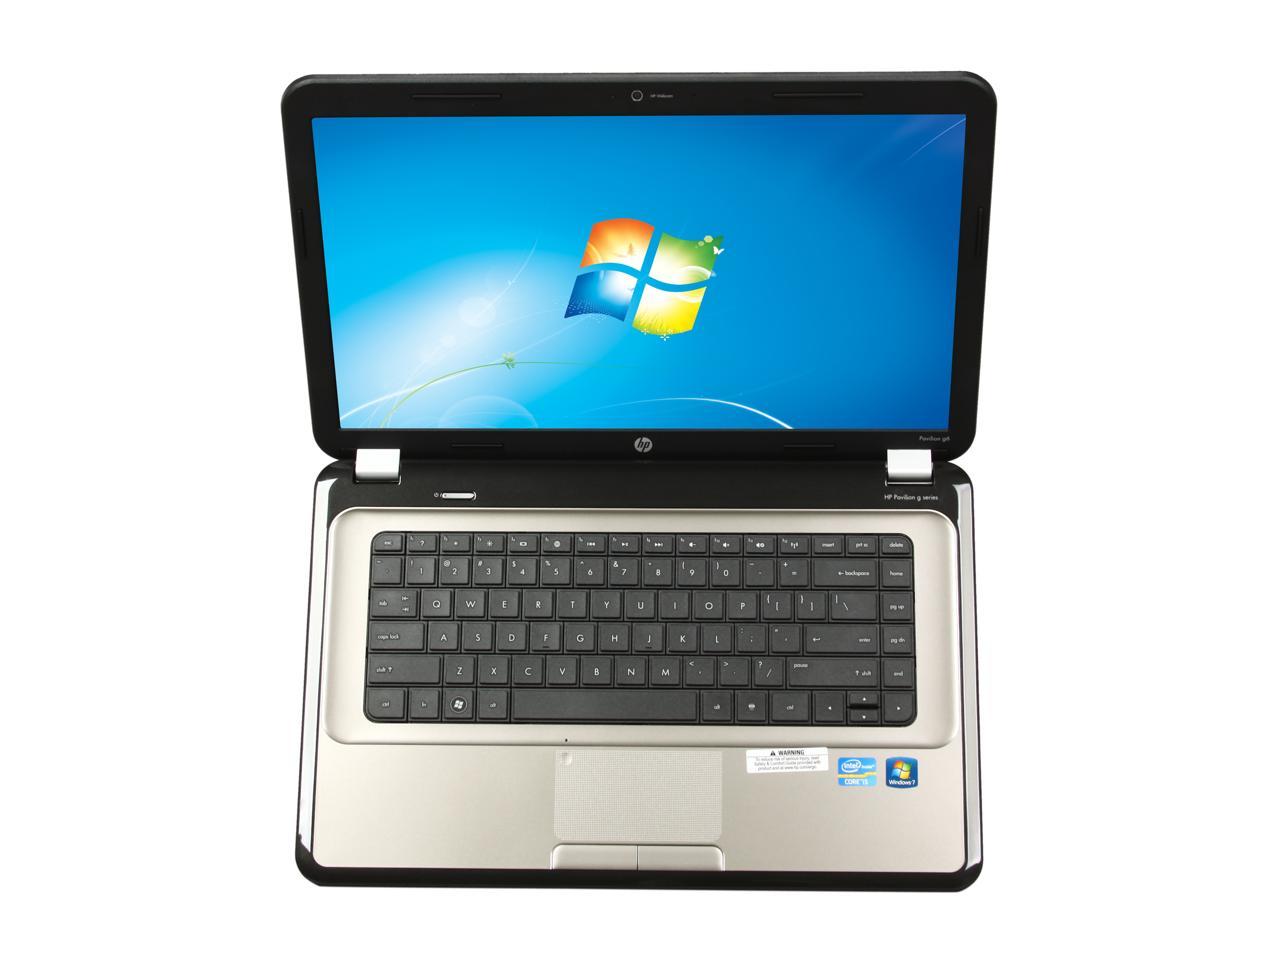 stam Afwezigheid rundvlees Refurbished: HP Laptop Pavilion Intel Core i5 2nd Gen 2430M (2.40GHz) 4GB  Memory 500GB HDD Intel HD Graphics 3000 15.6" Windows 7 Home Premium 64-Bit  g6-1c57dx - Newegg.com